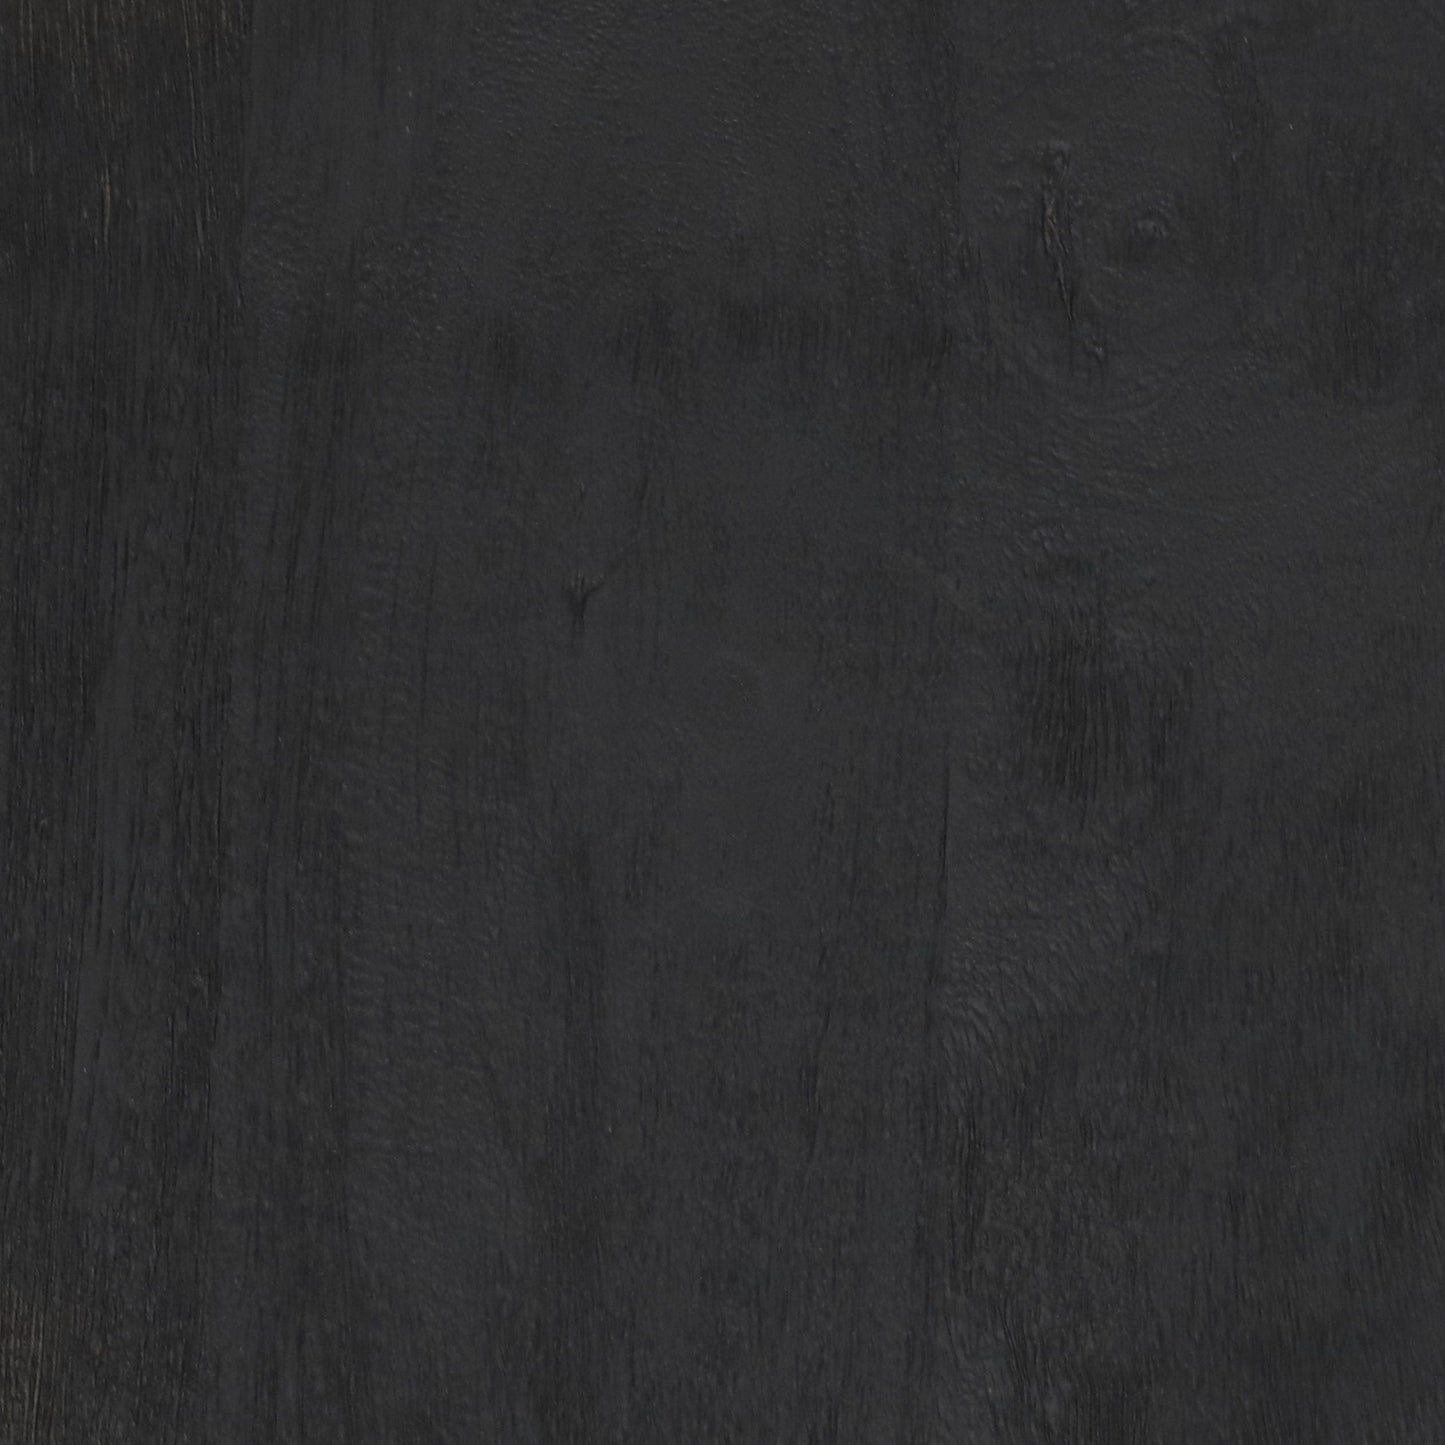 Close up of Mango Wood painted black